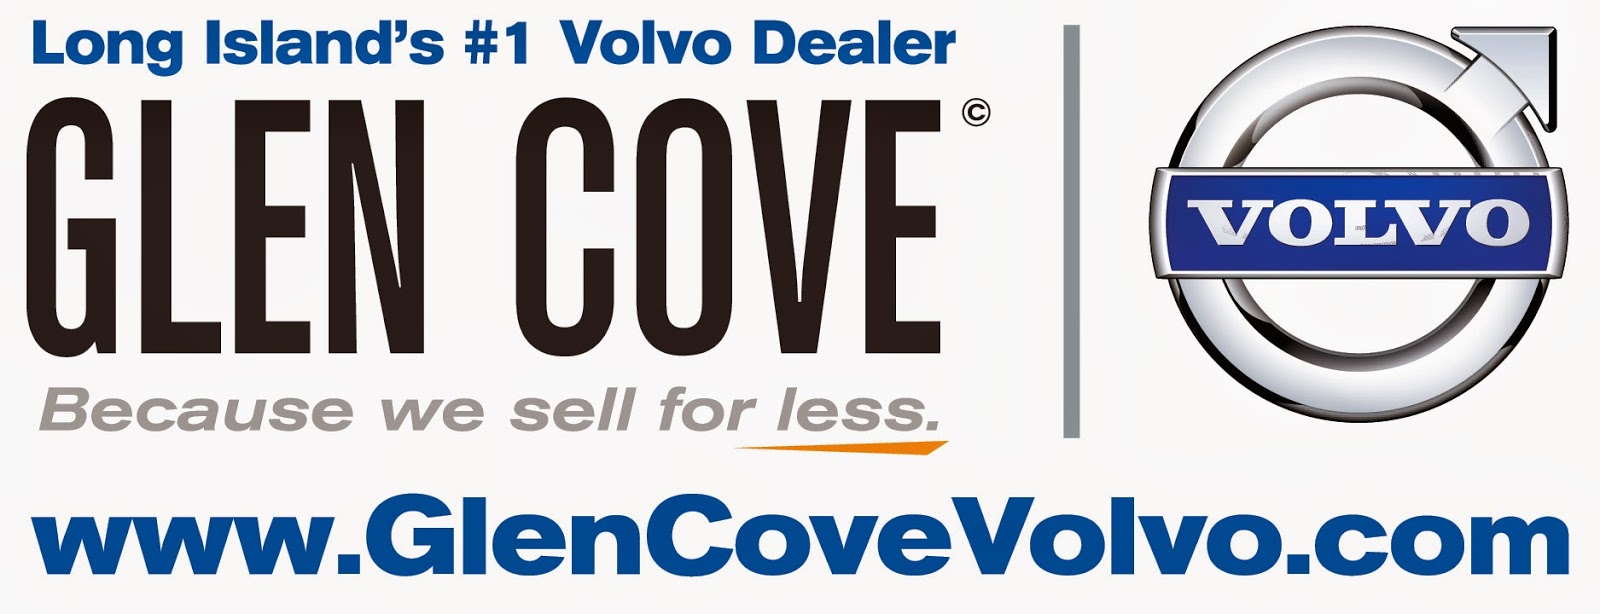 Photo of Glen Cove Volvo in Glen Cove City, New York, United States - 3 Picture of Point of interest, Establishment, Car dealer, Store